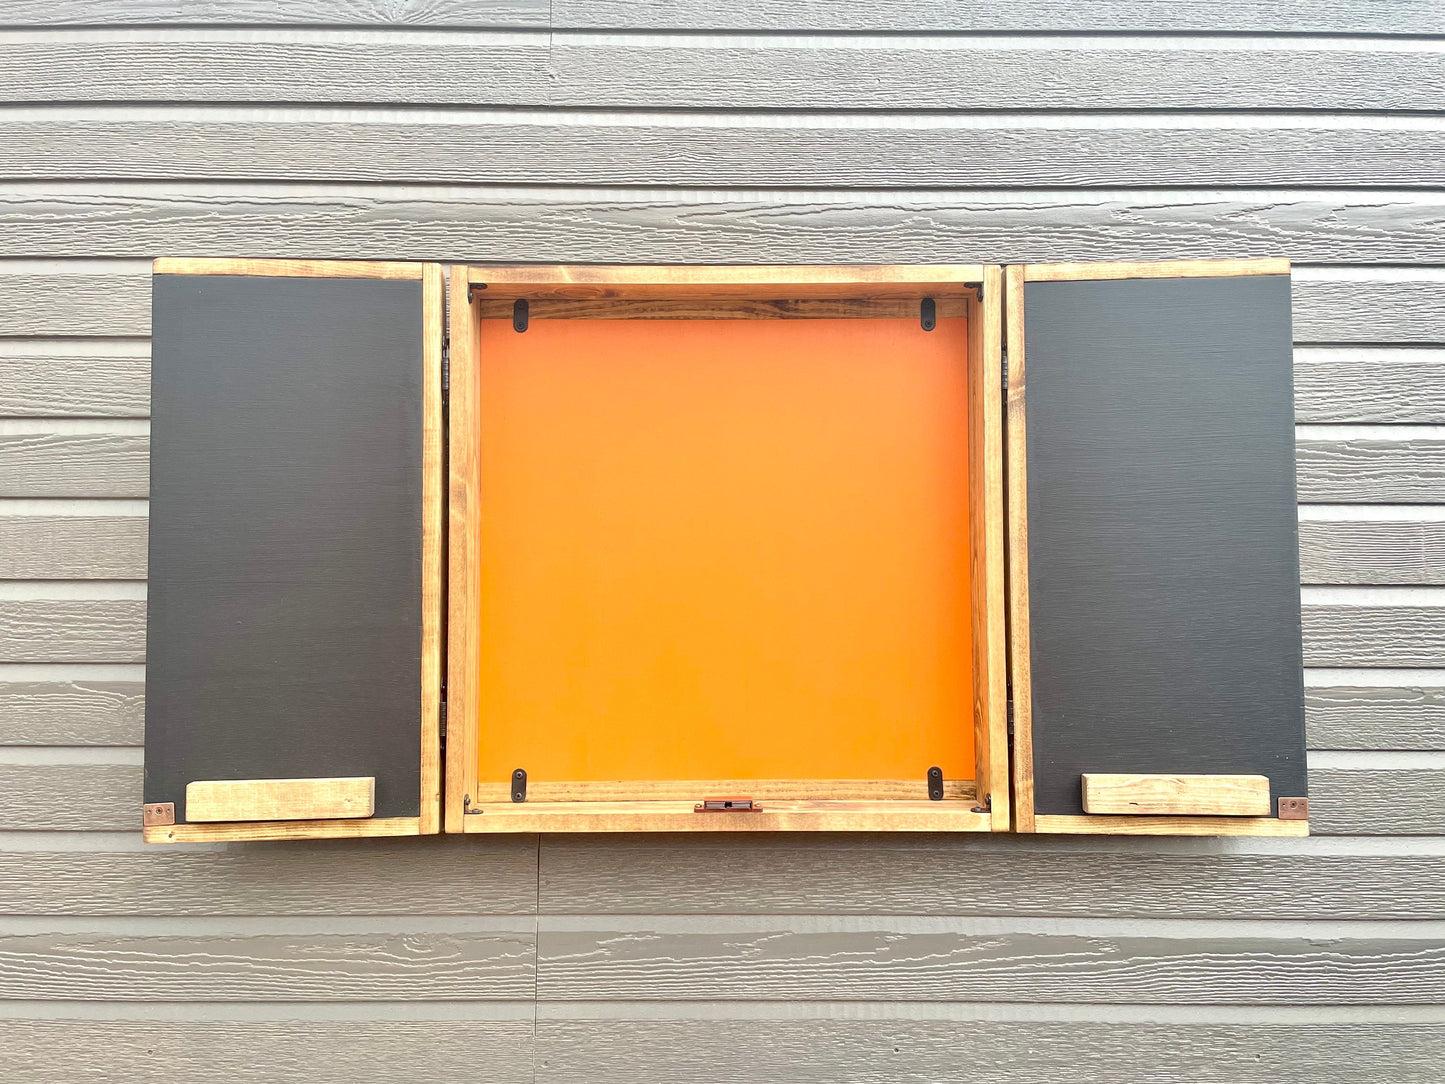 Rustic Dartboard Cabinet - Rustic Orange Mountain Art  24”x24” - Rustic Cabinet - Game Room / Man Cave Art - Wall Decor - Cabinet